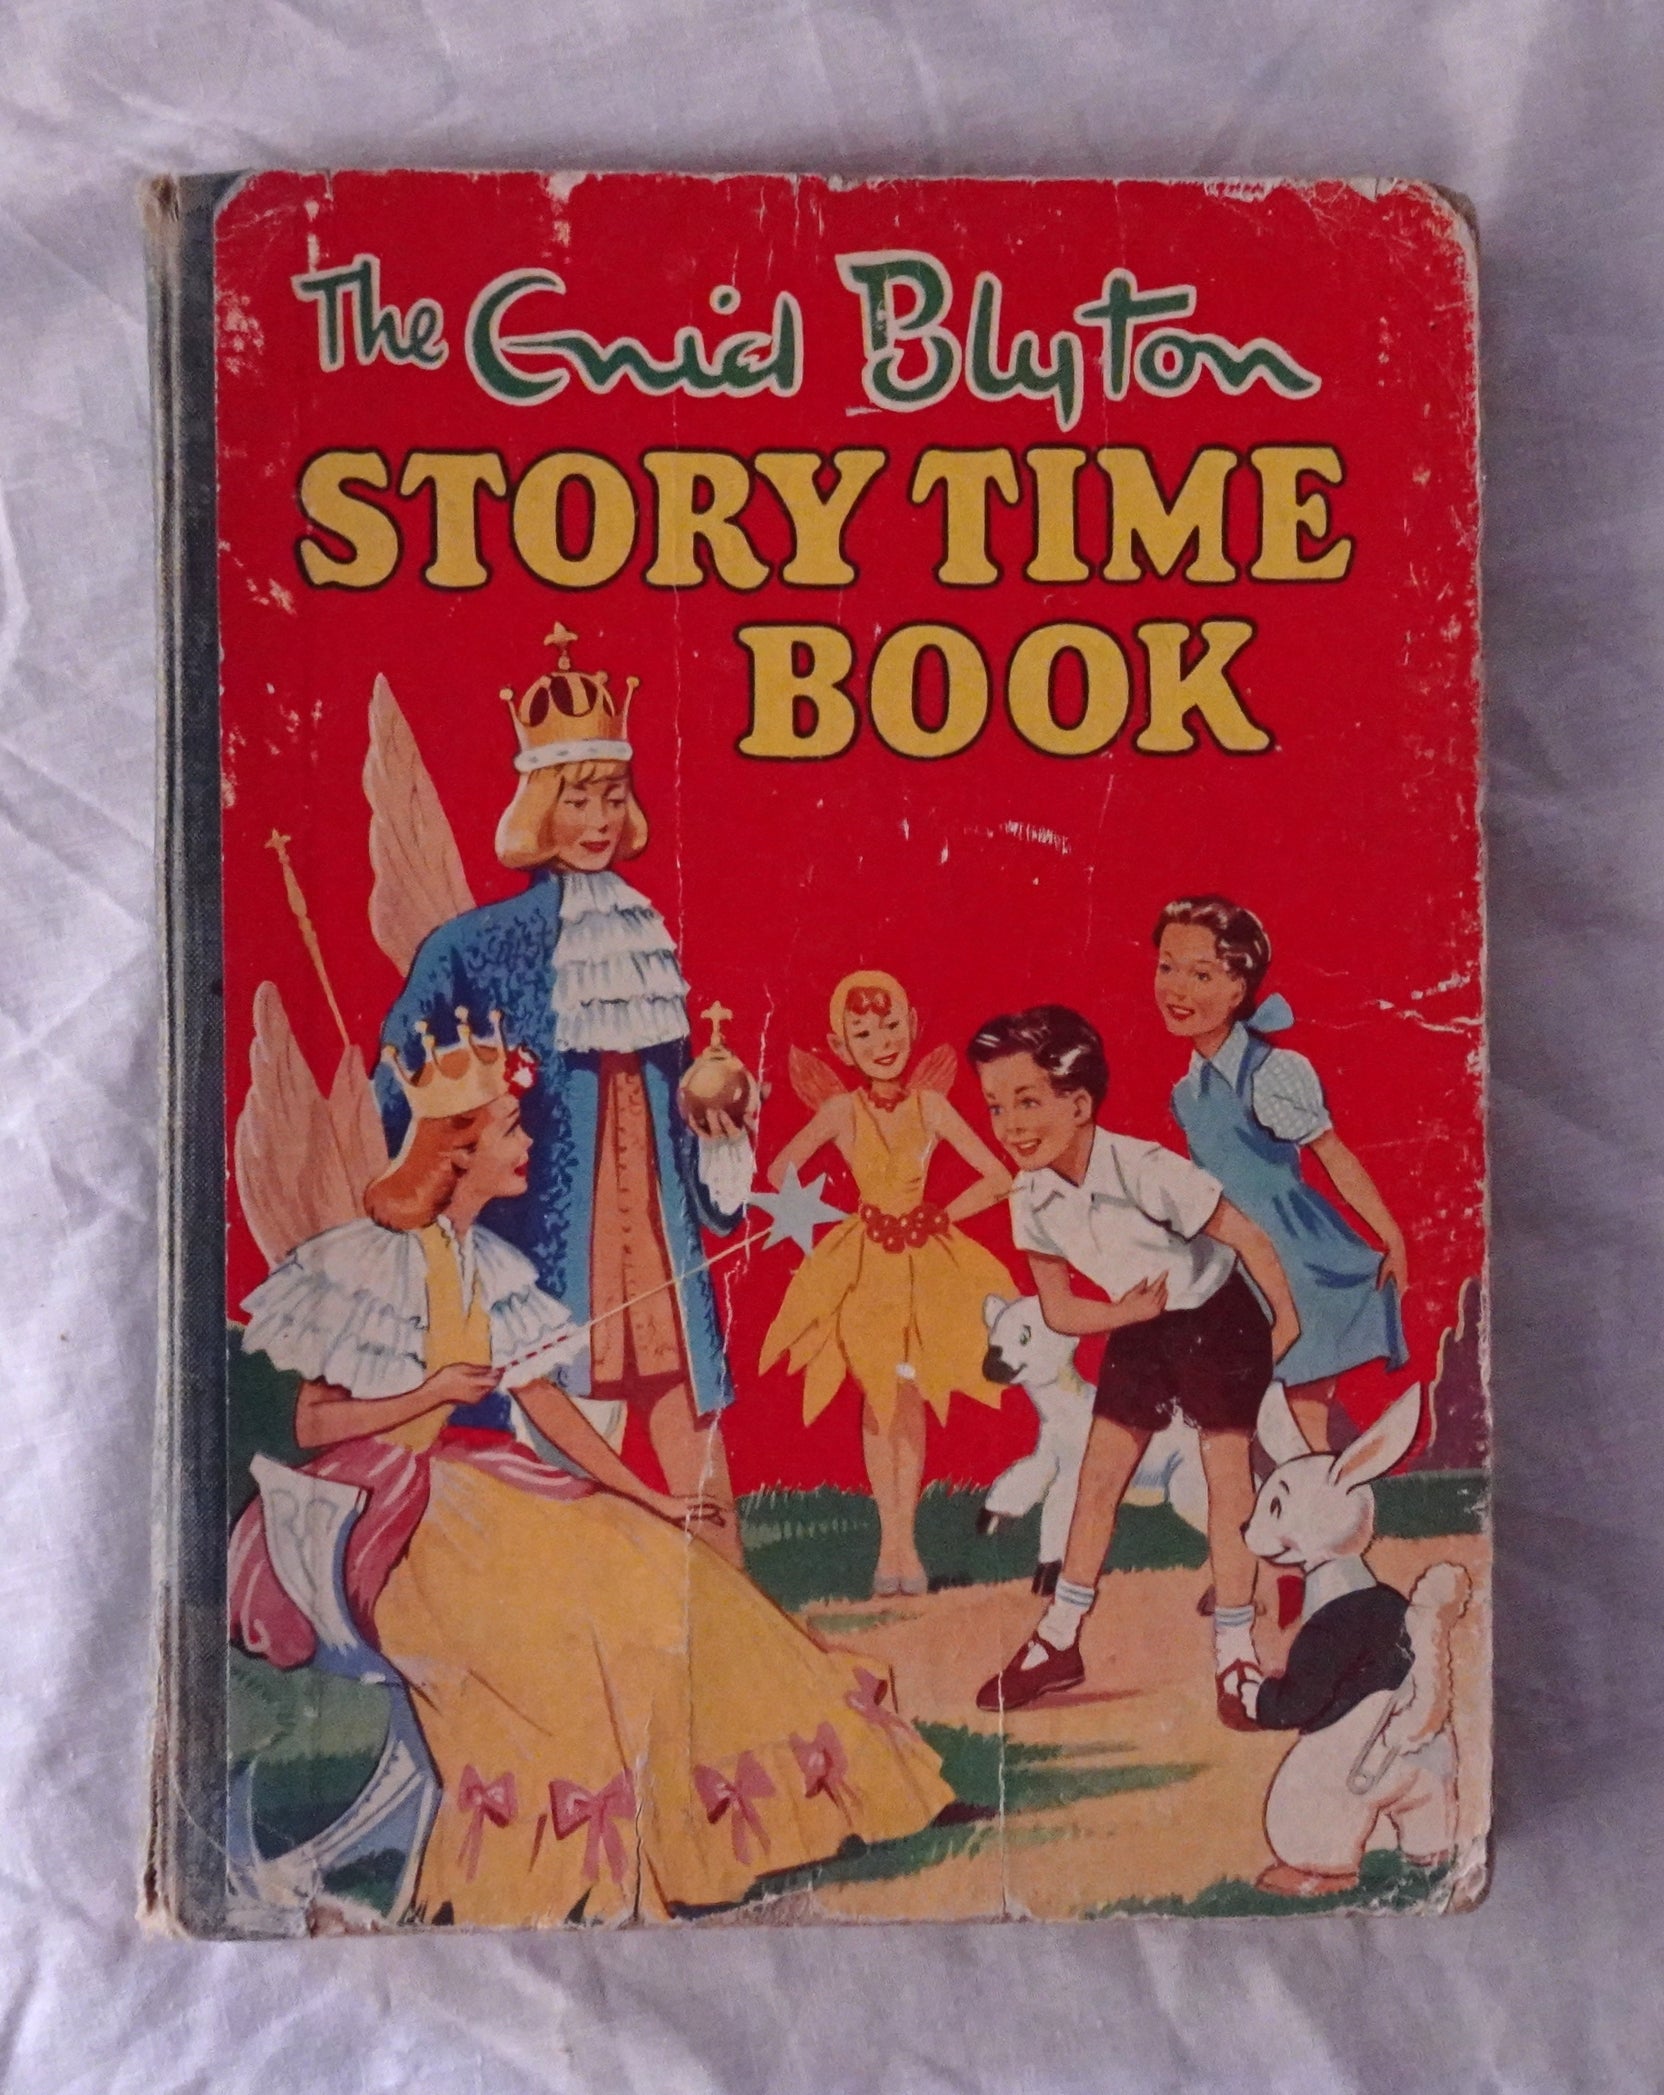 The Enid Blyton Storytime Book  by Enid Blyton